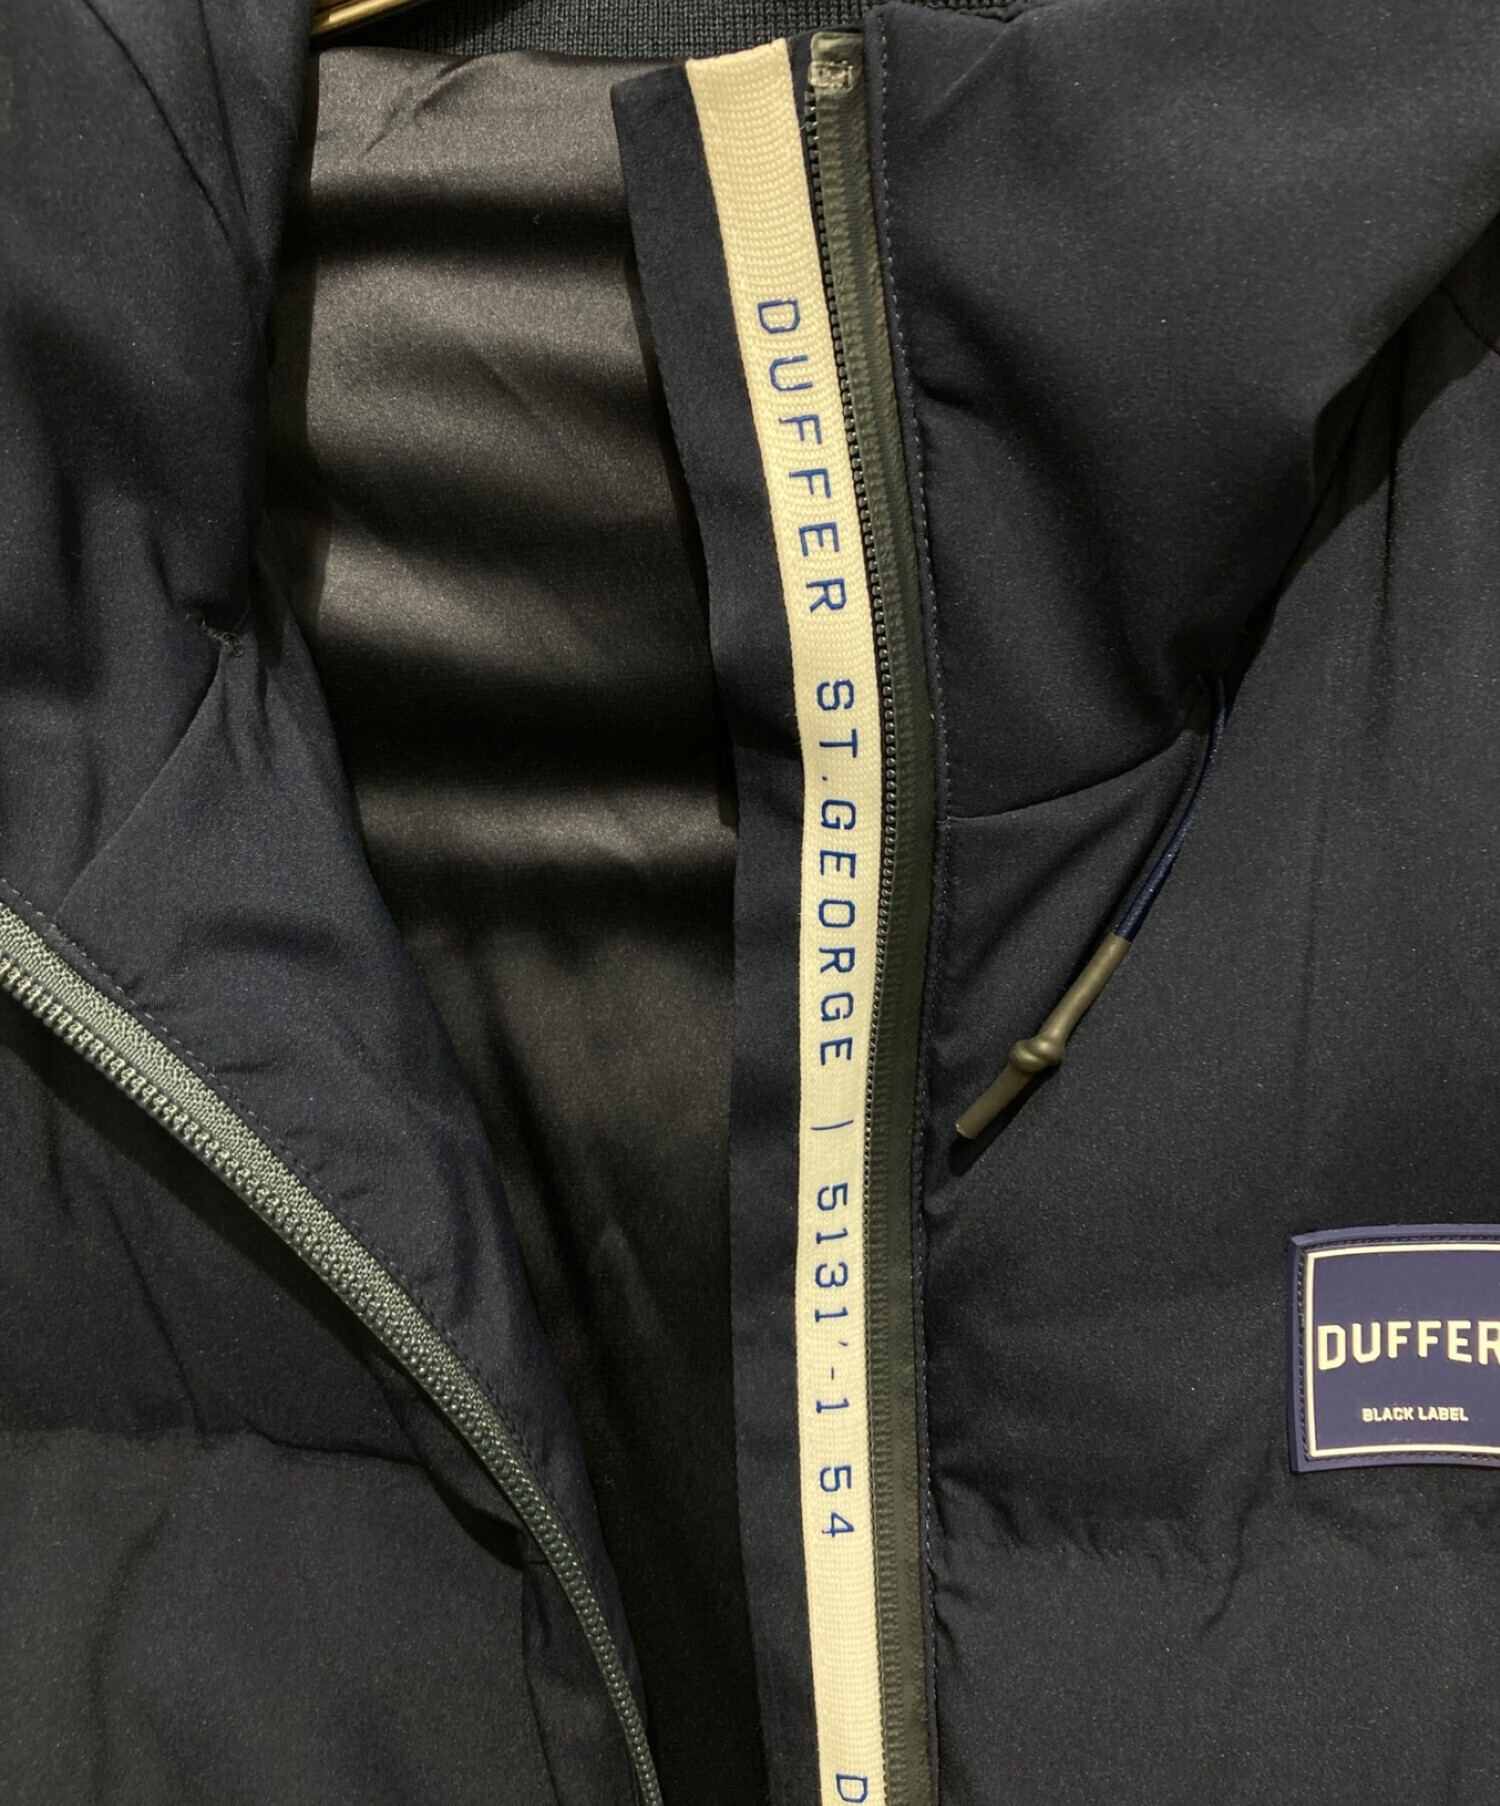 DUFFER BLACK LABEL (ダファー ブラック レーベル) ダウンジャケット ネイビー サイズ:SIZE S